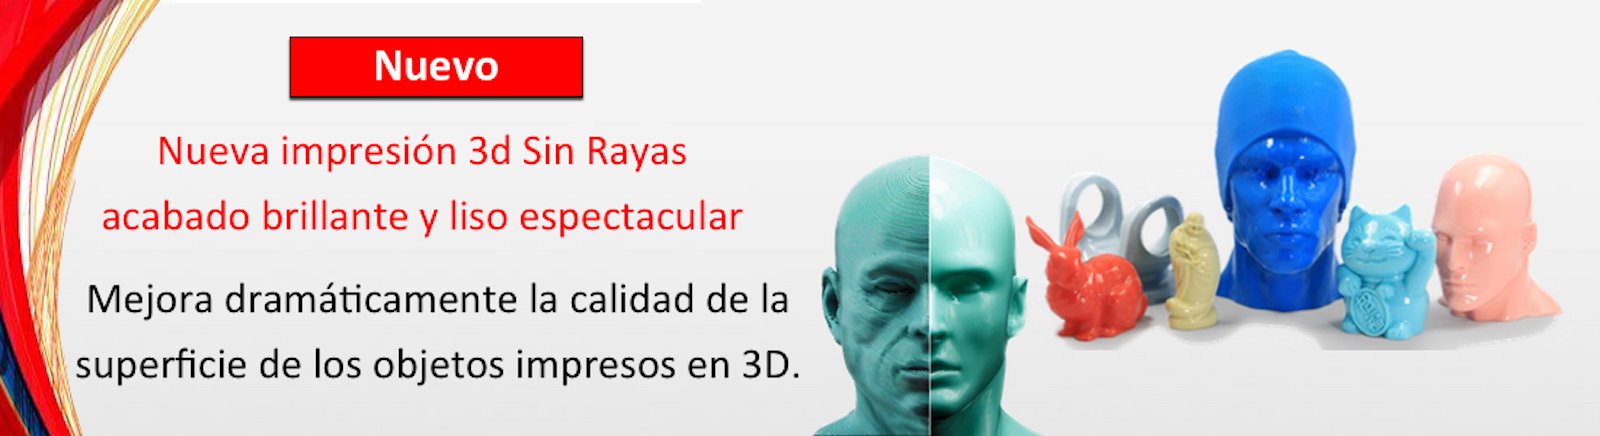 IMPRESION 3D SIN RAYAS